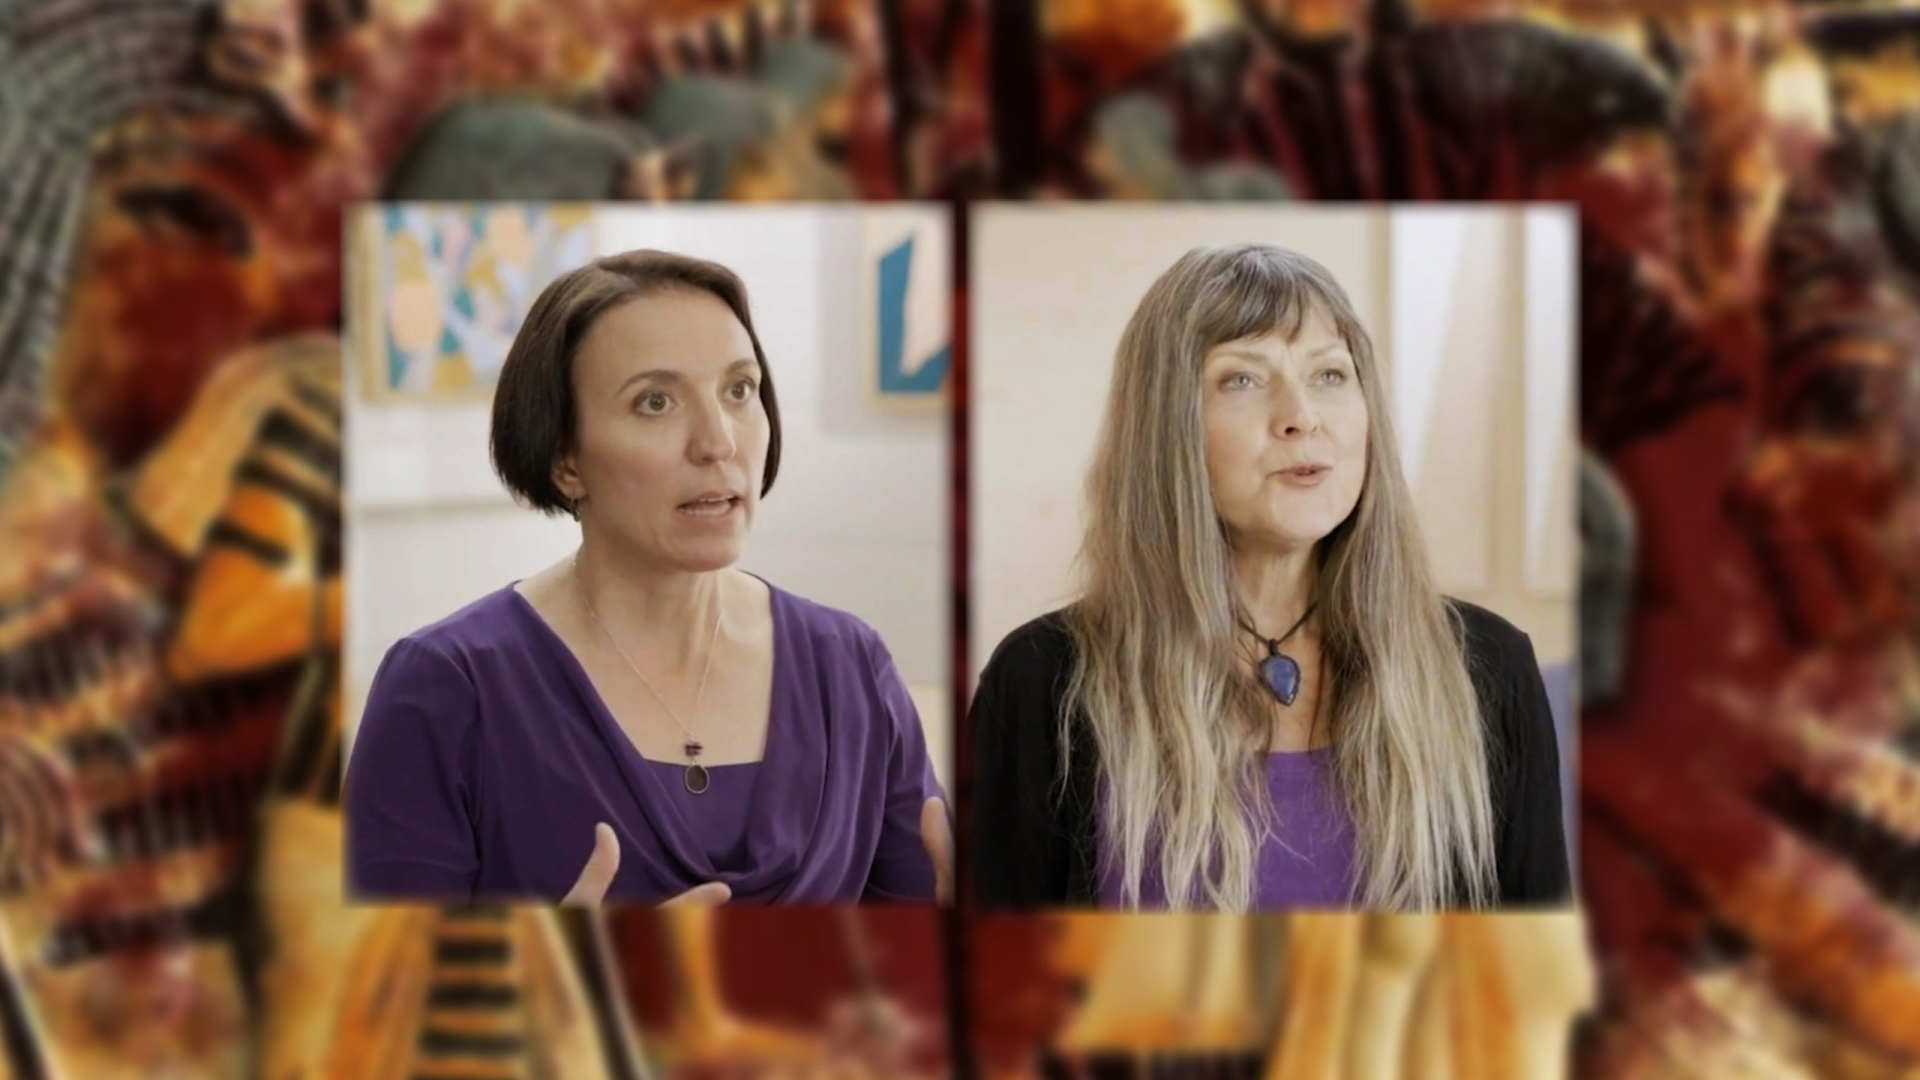 Kate Liszka (left) and Kasia Szpakowska in the Wondrium series “The Real Ancient Egypt.”